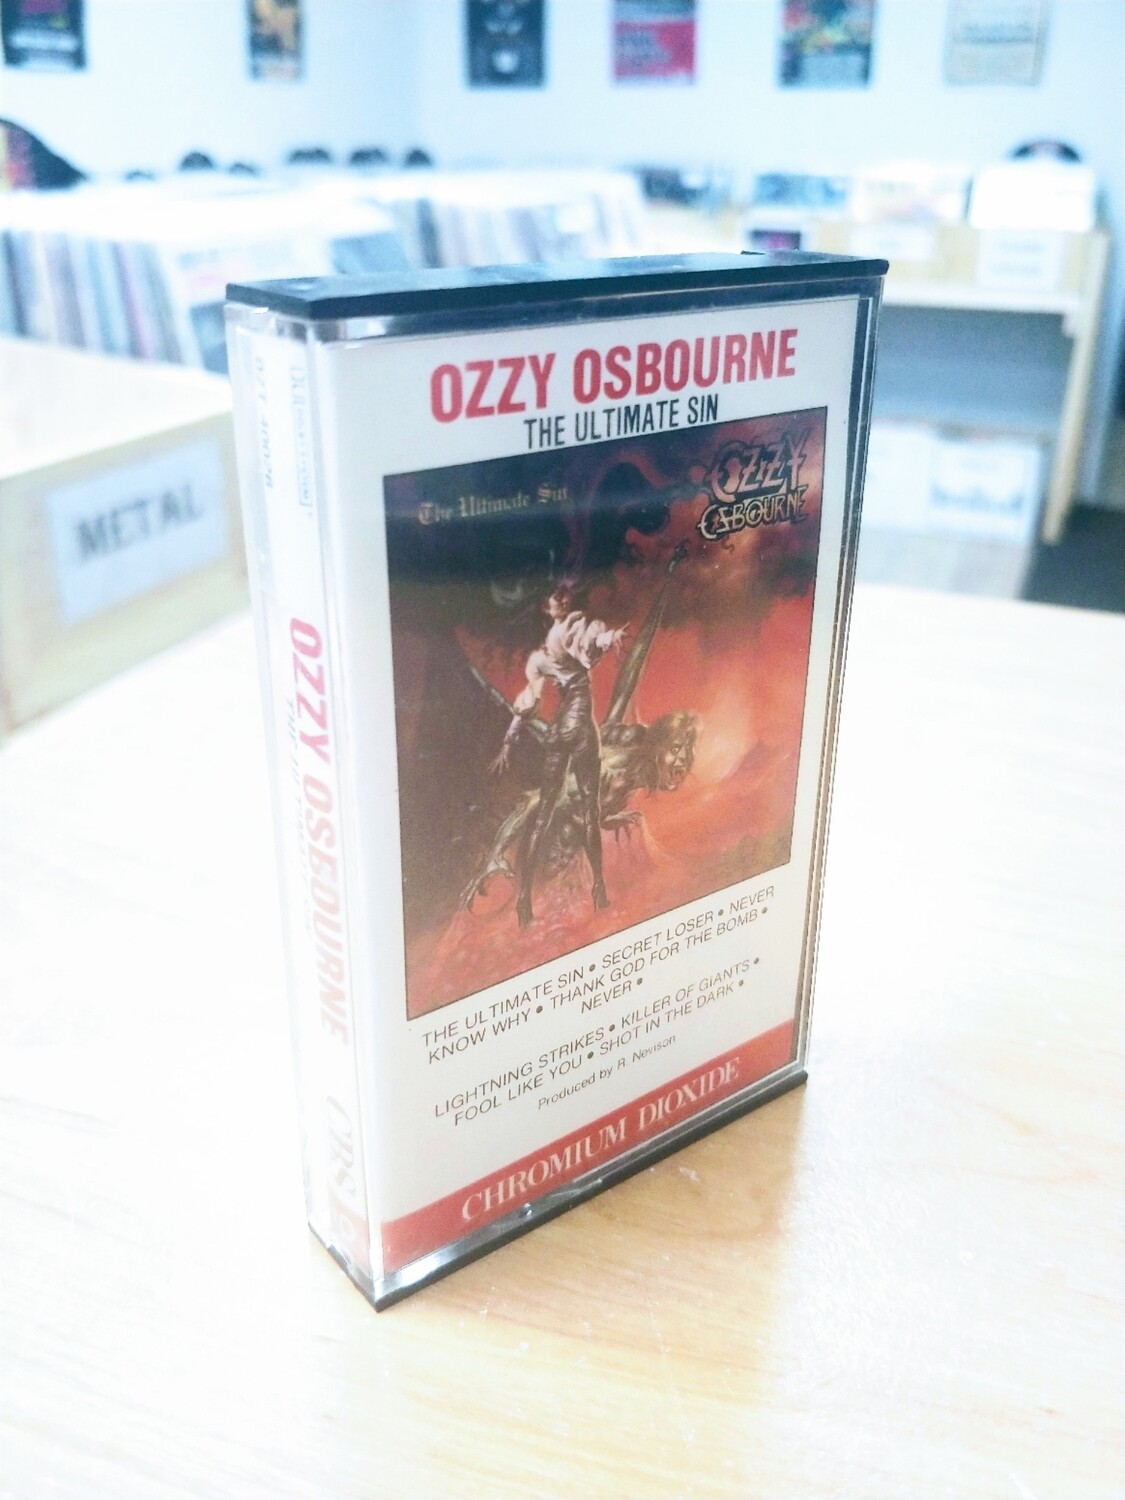 Ozzy Osbourne - The ultimate sin (CASSETTE)